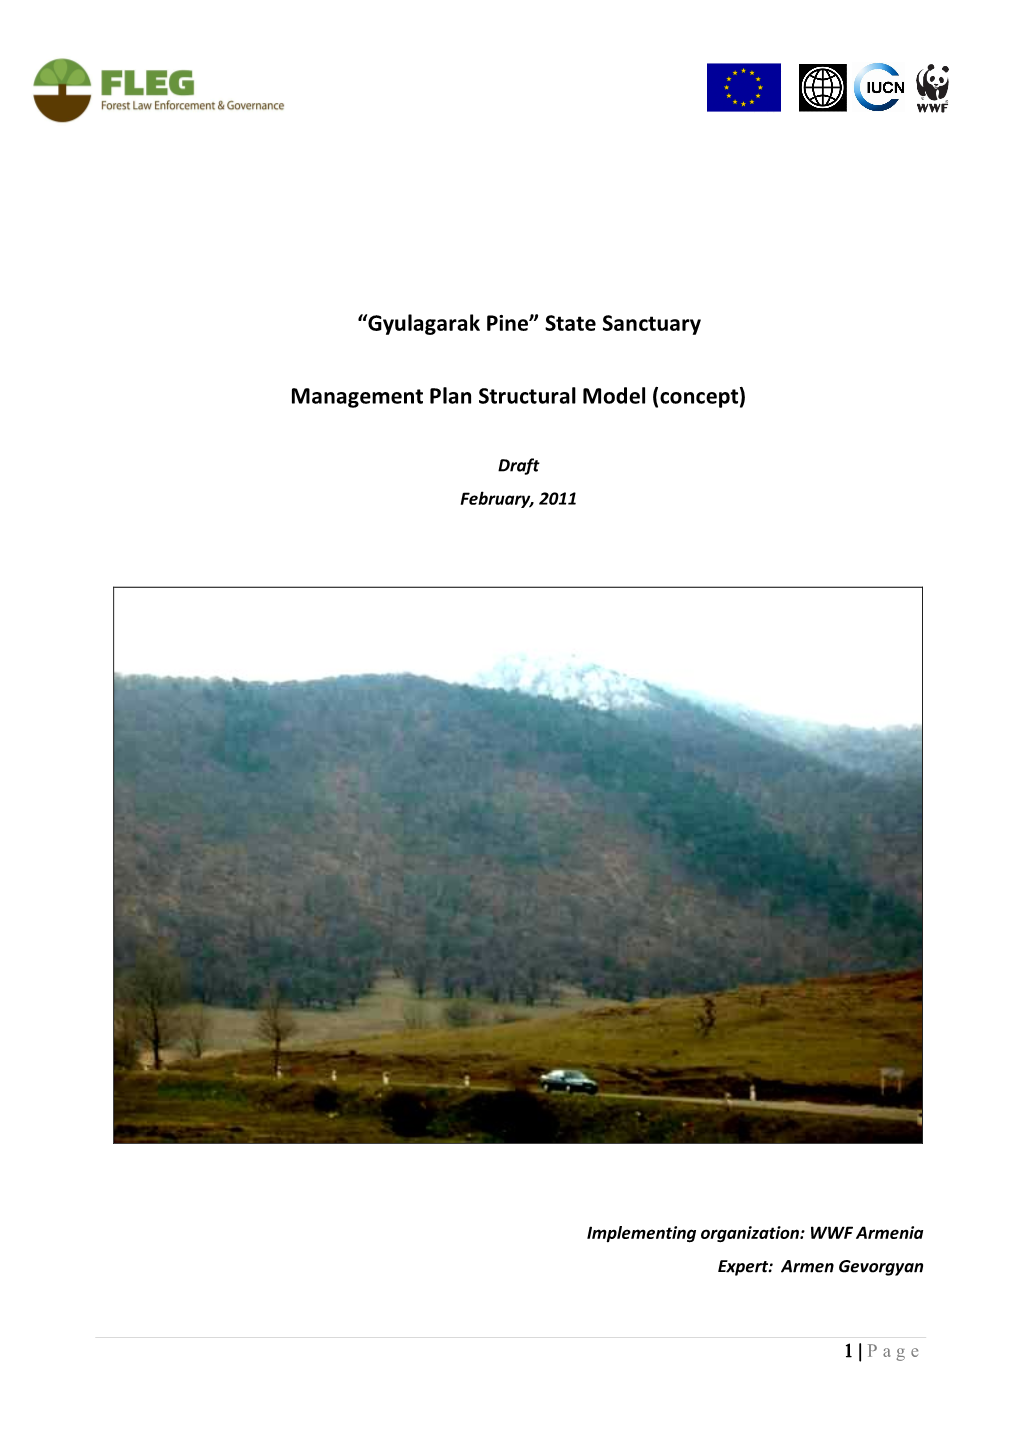 “Gyulagarak Pine” State Sanctuary Management Plan Structural Model